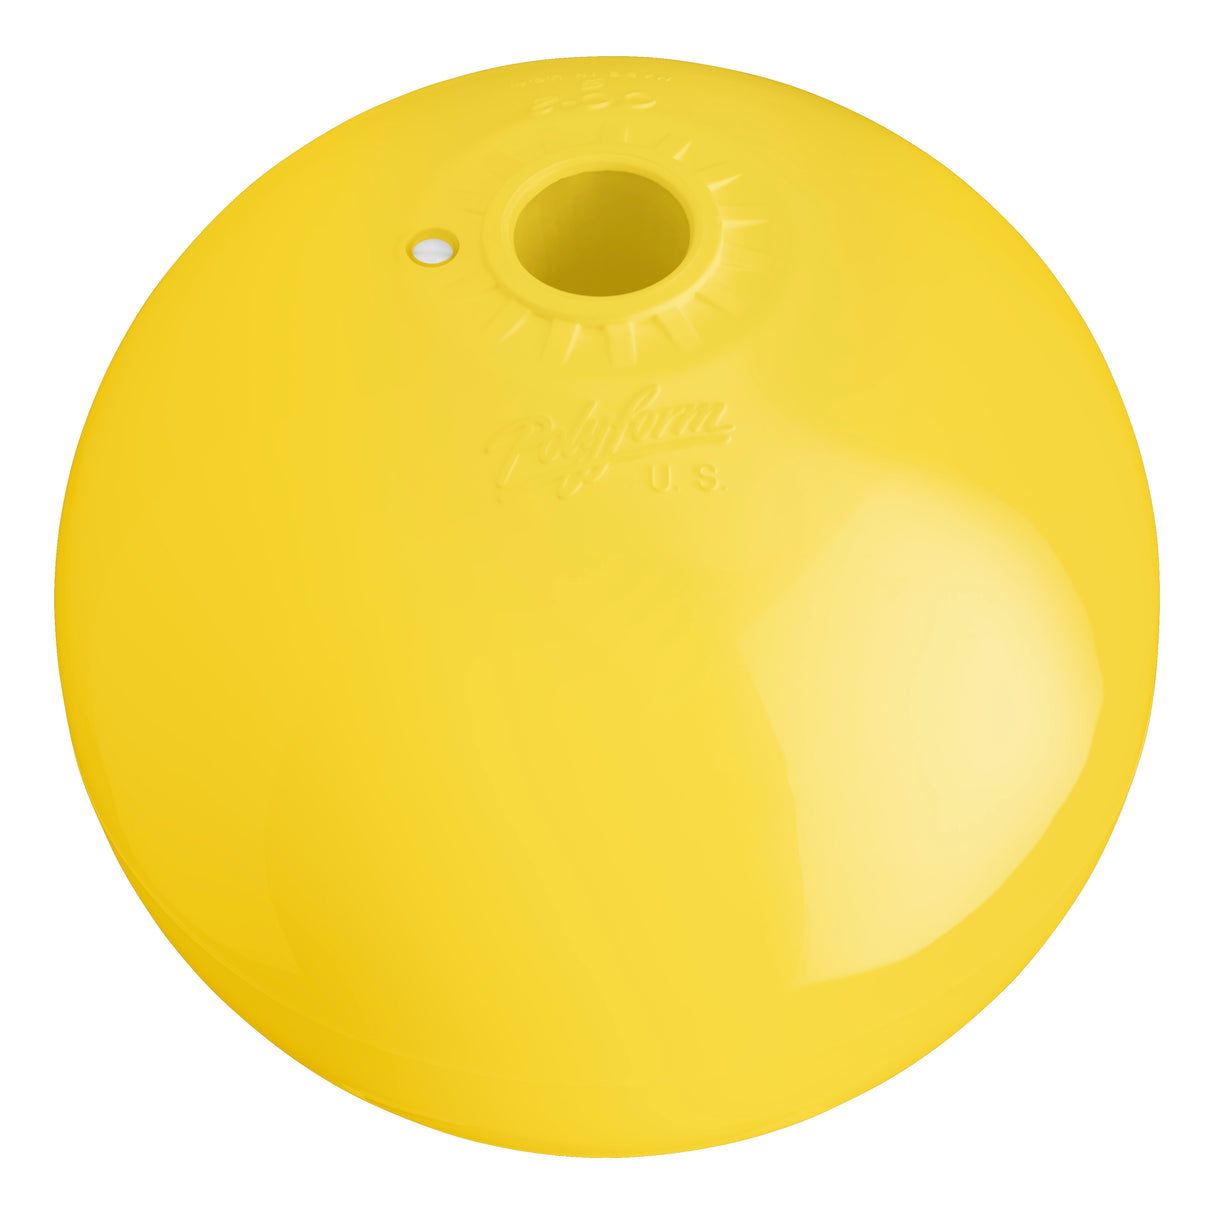 Hole through center mooring and marker buoy, Polyform CC-6 Yellow angled shot